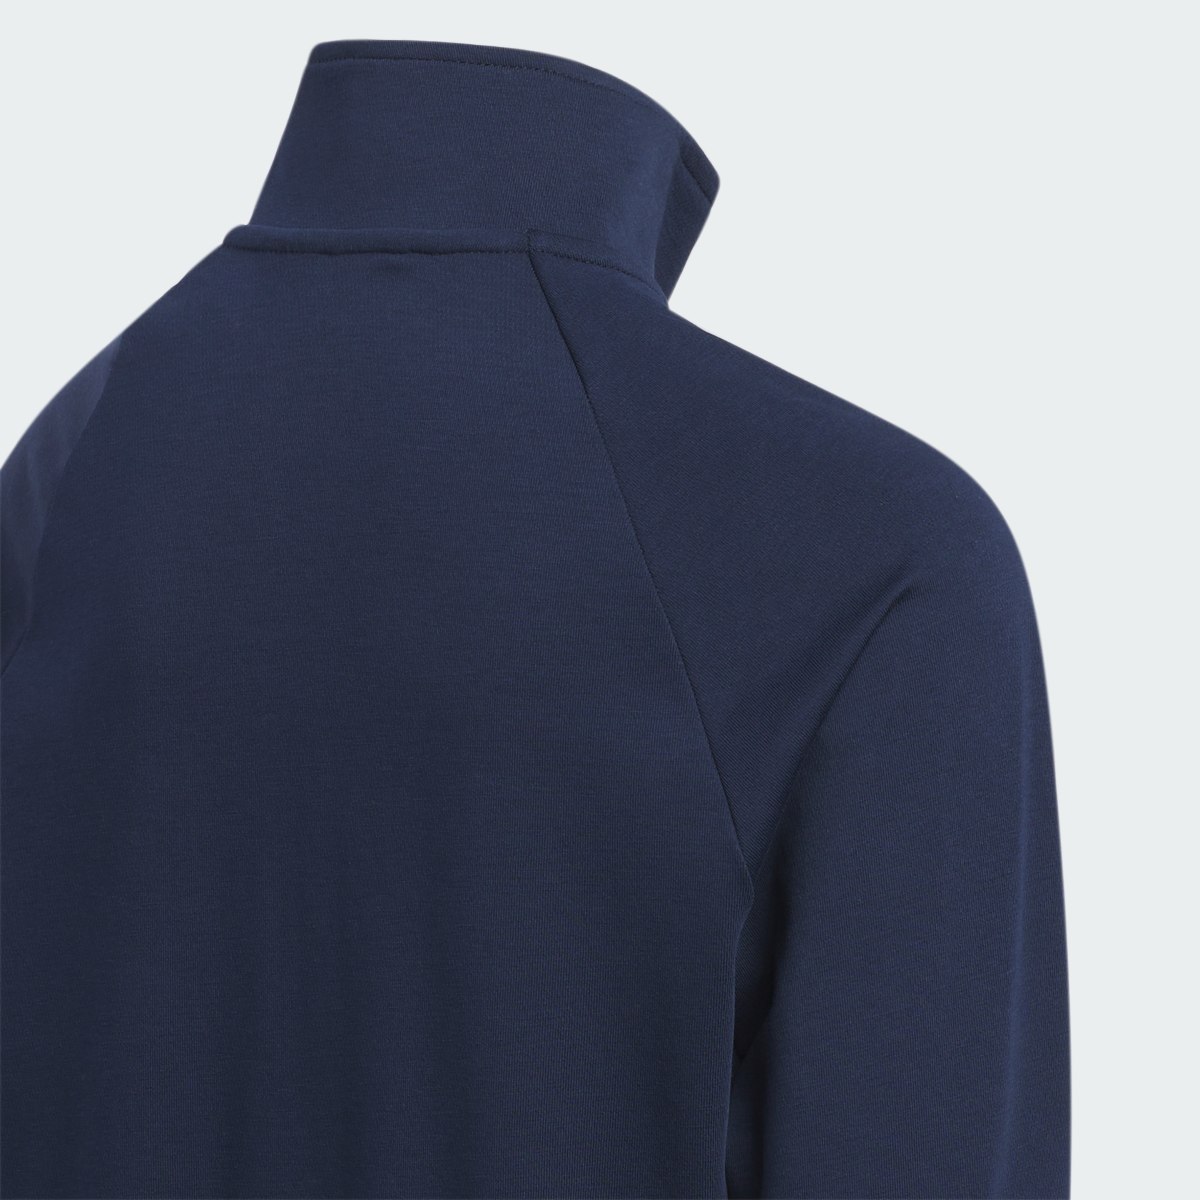 Adidas 1/4-Zip Layer Pullover. 5